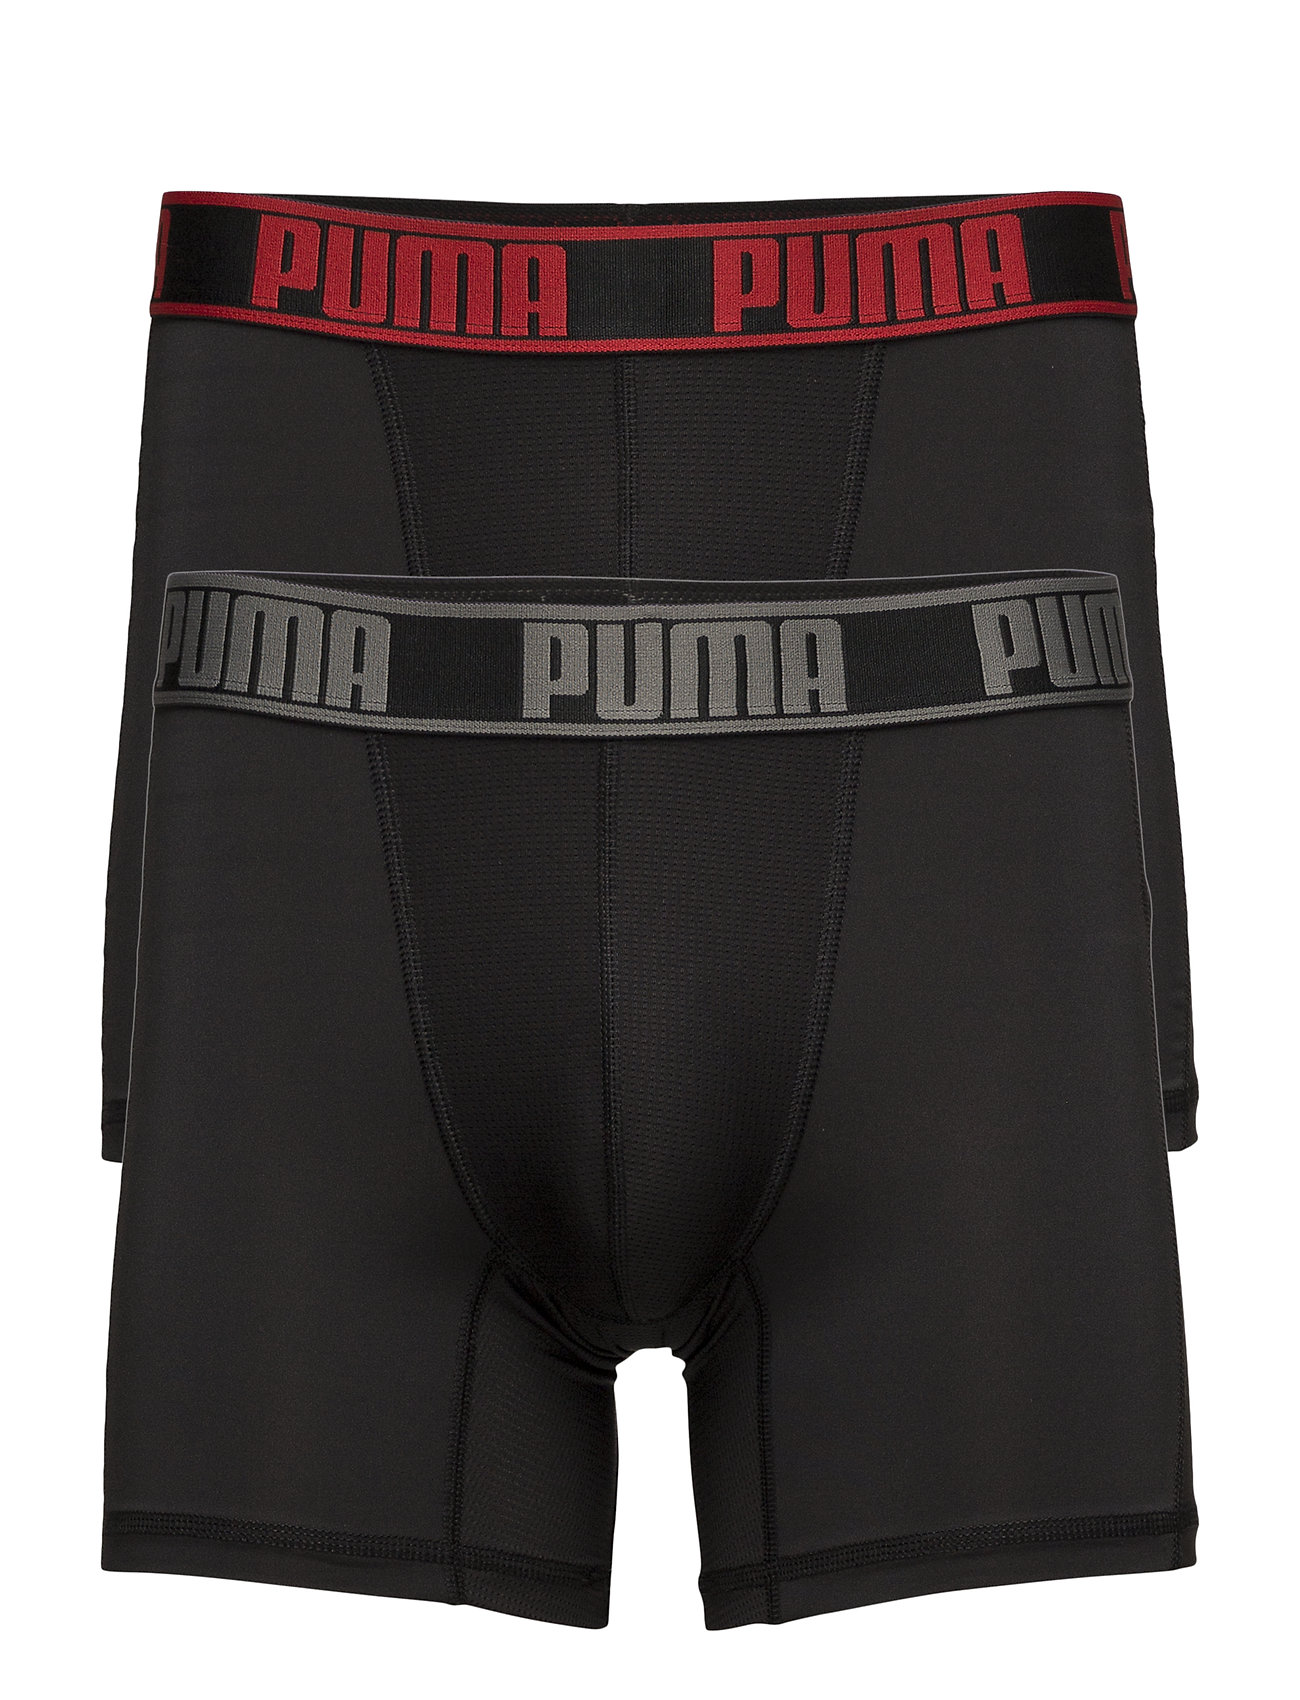 puma boxers active style